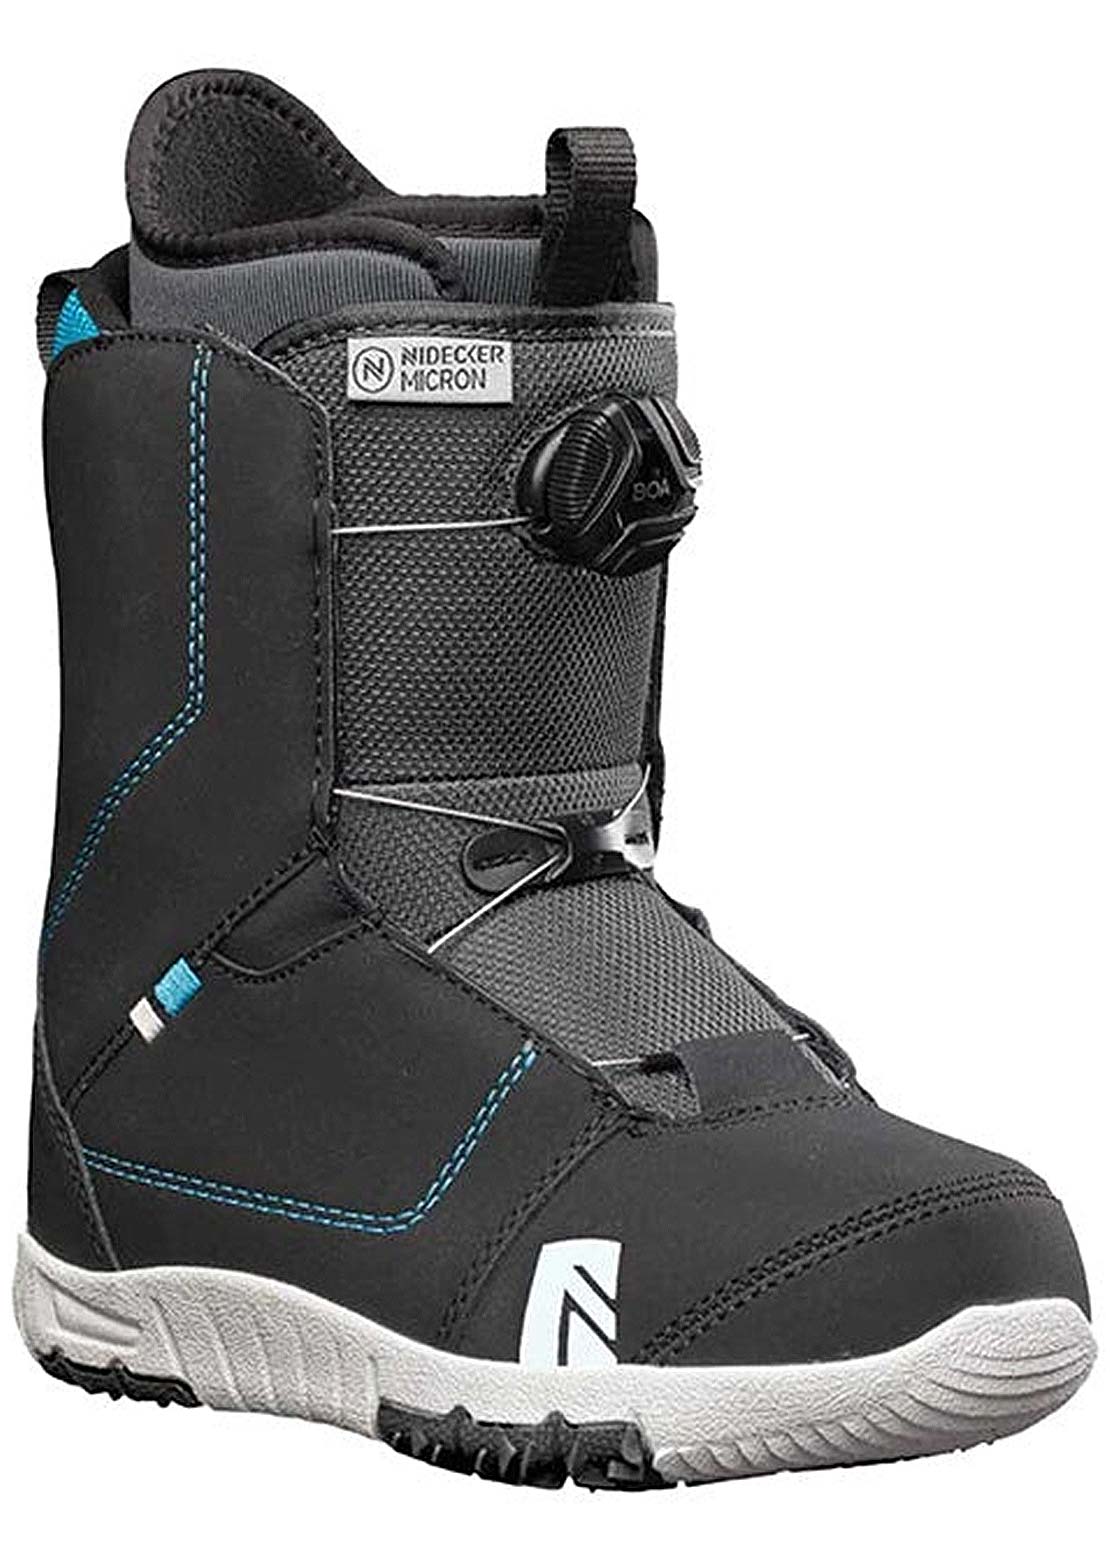 Nidecker Micron Snow Boots Black